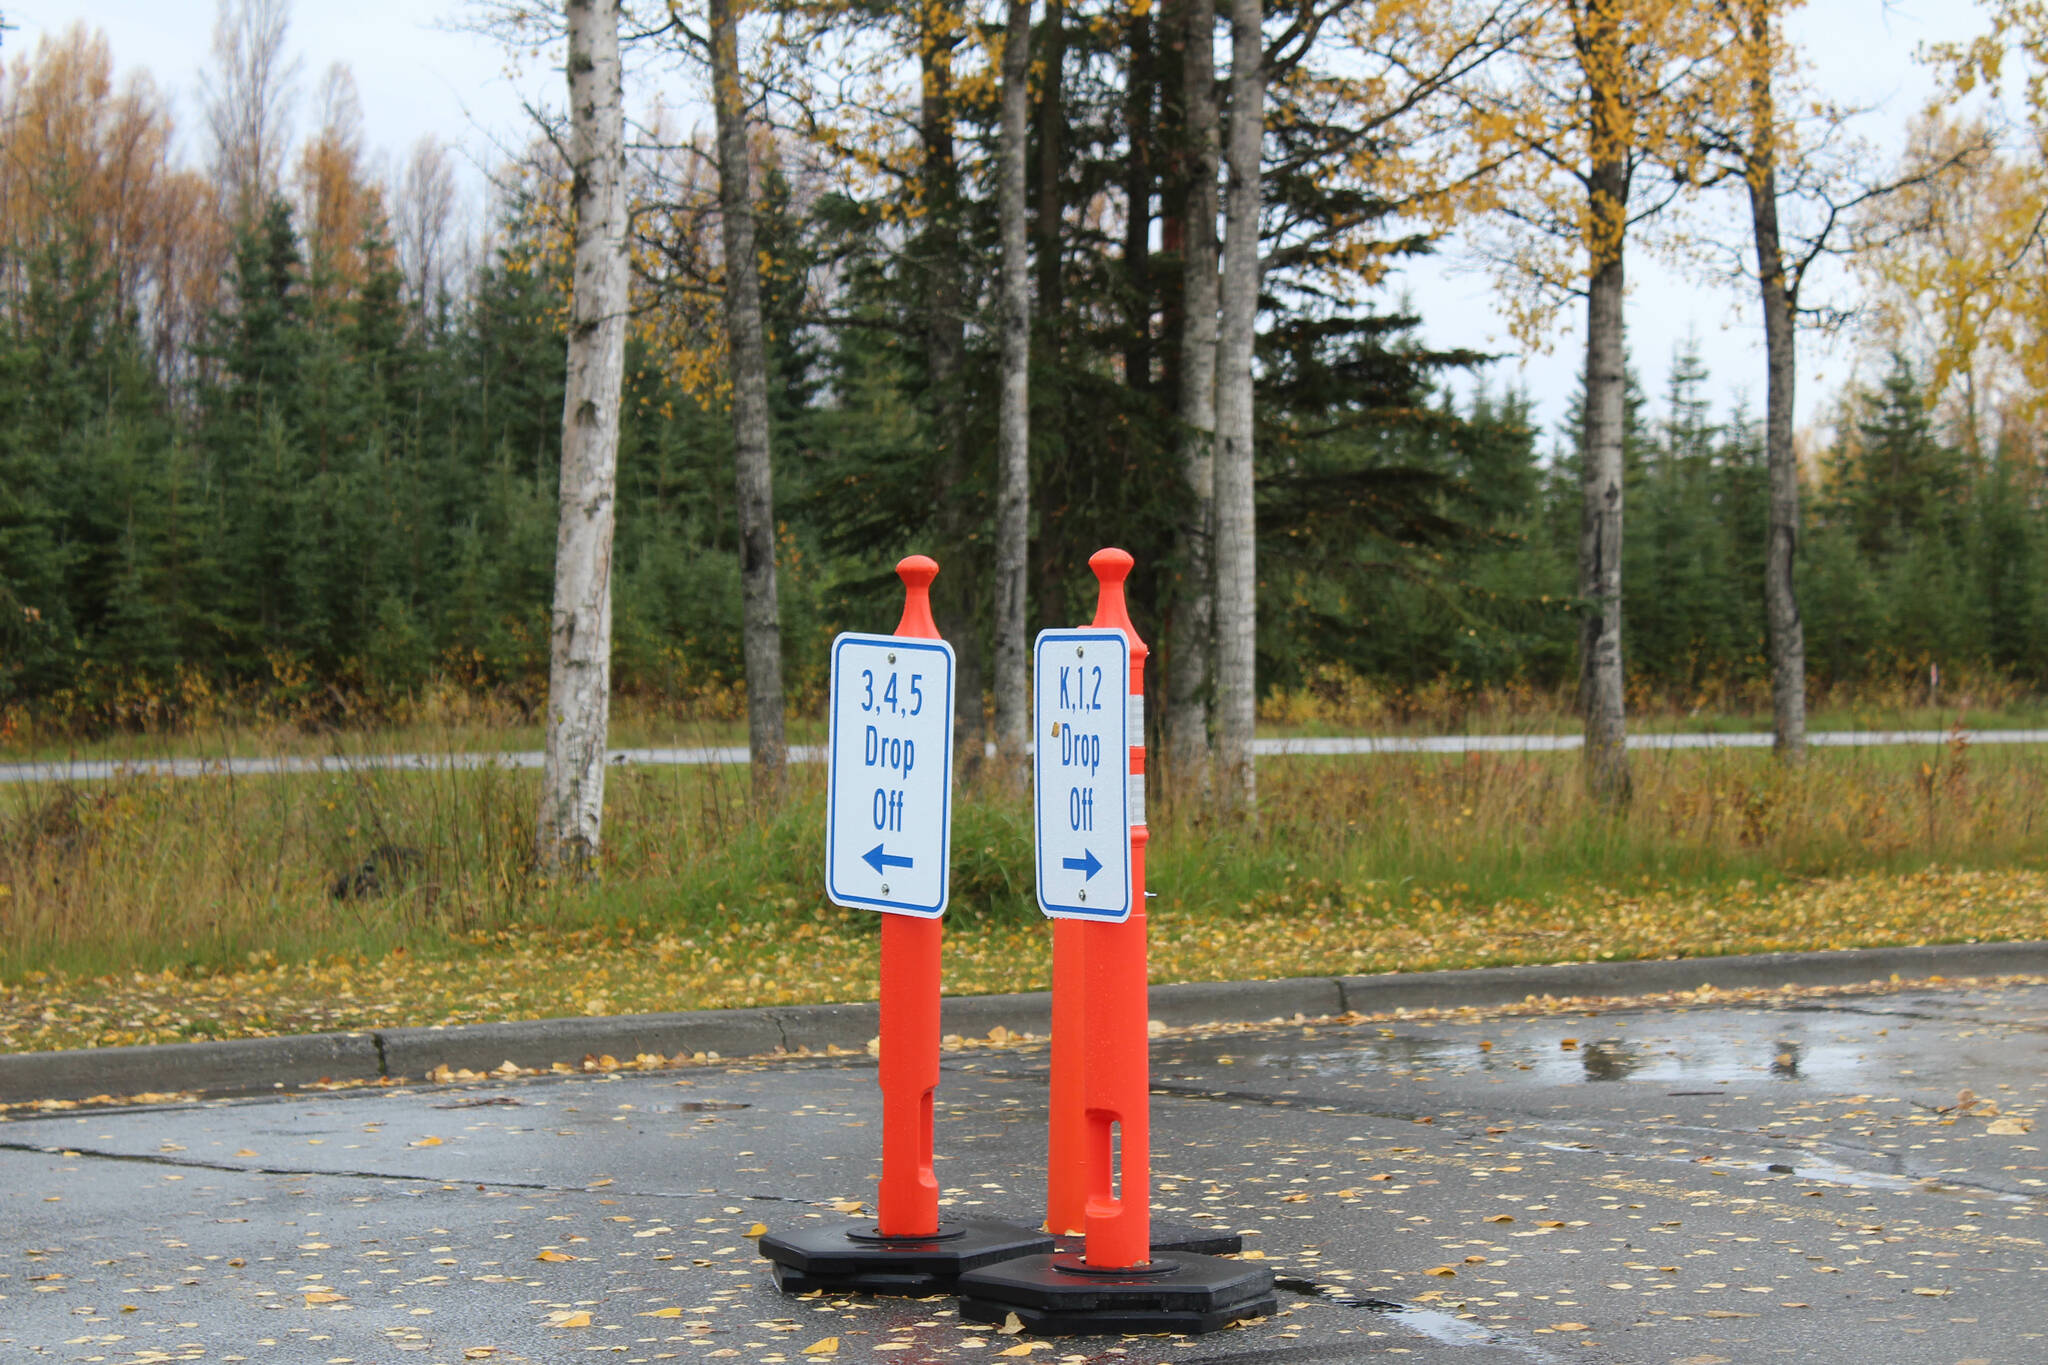 Cones direct student pick up traffic at Mountain View Elementary School on Thursday, Sept. 29, 2022 in Kenai, Alaska. (Ashlyn O’Hara/Peninsula Clarion)